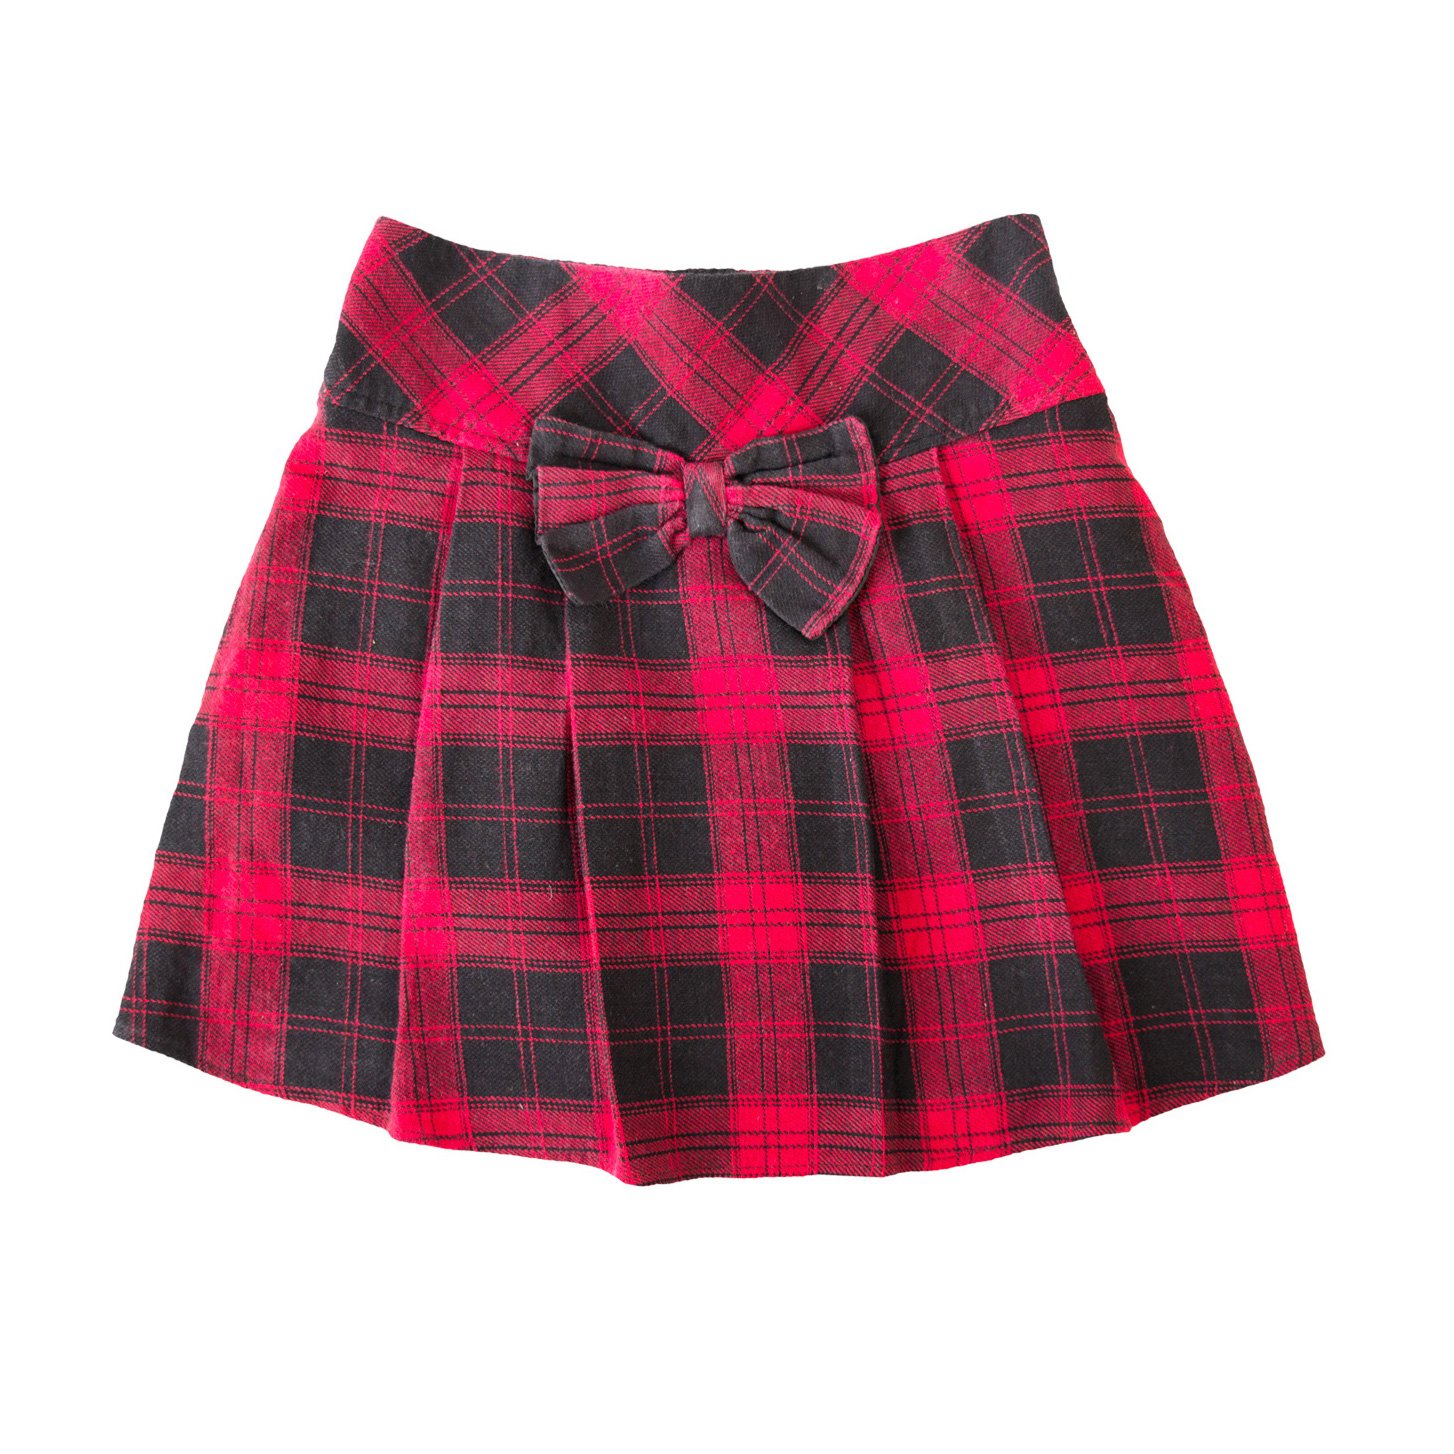 Kids checkered skirt